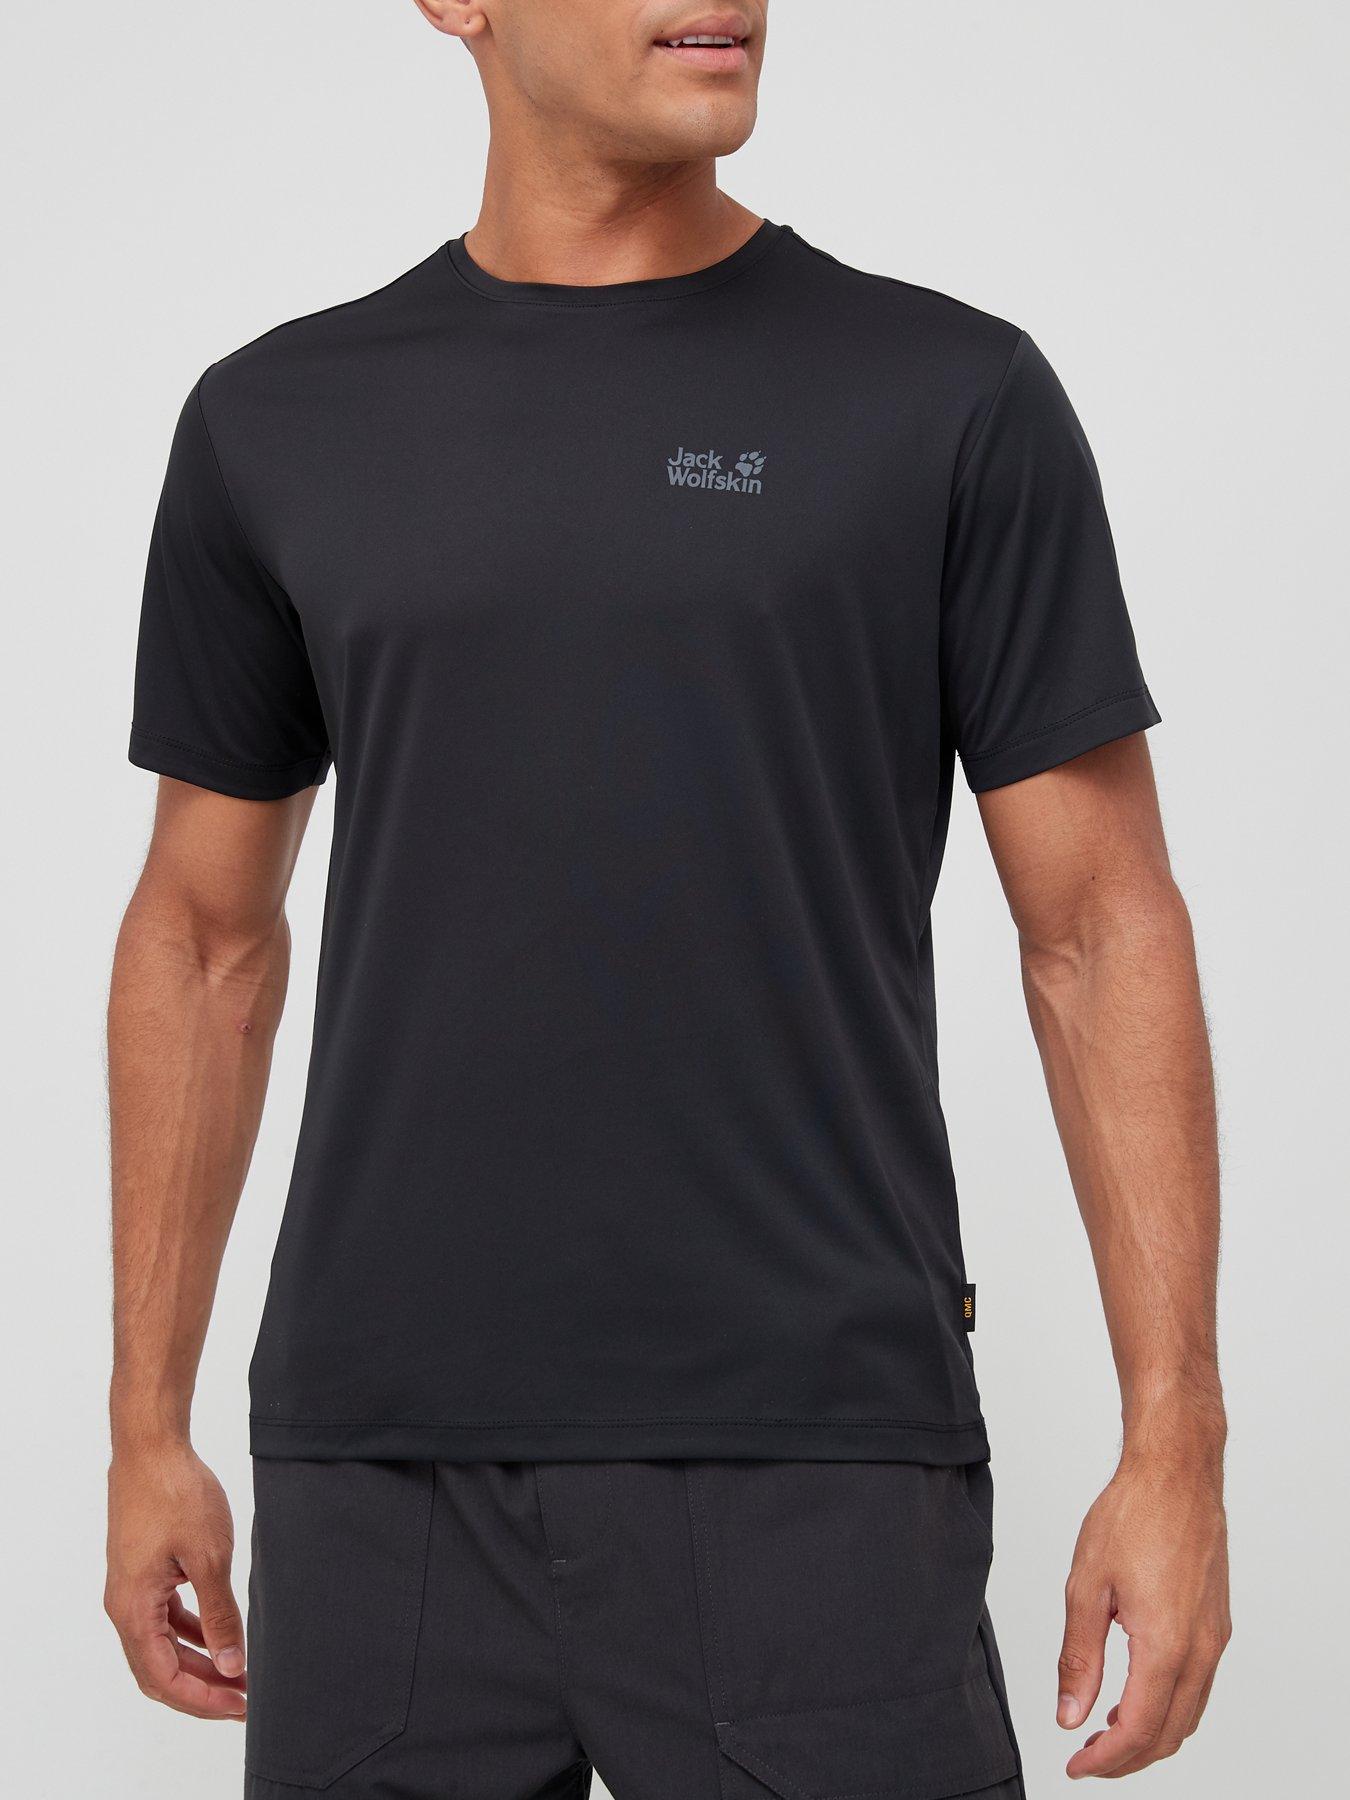  Tech T-Shirt - Black